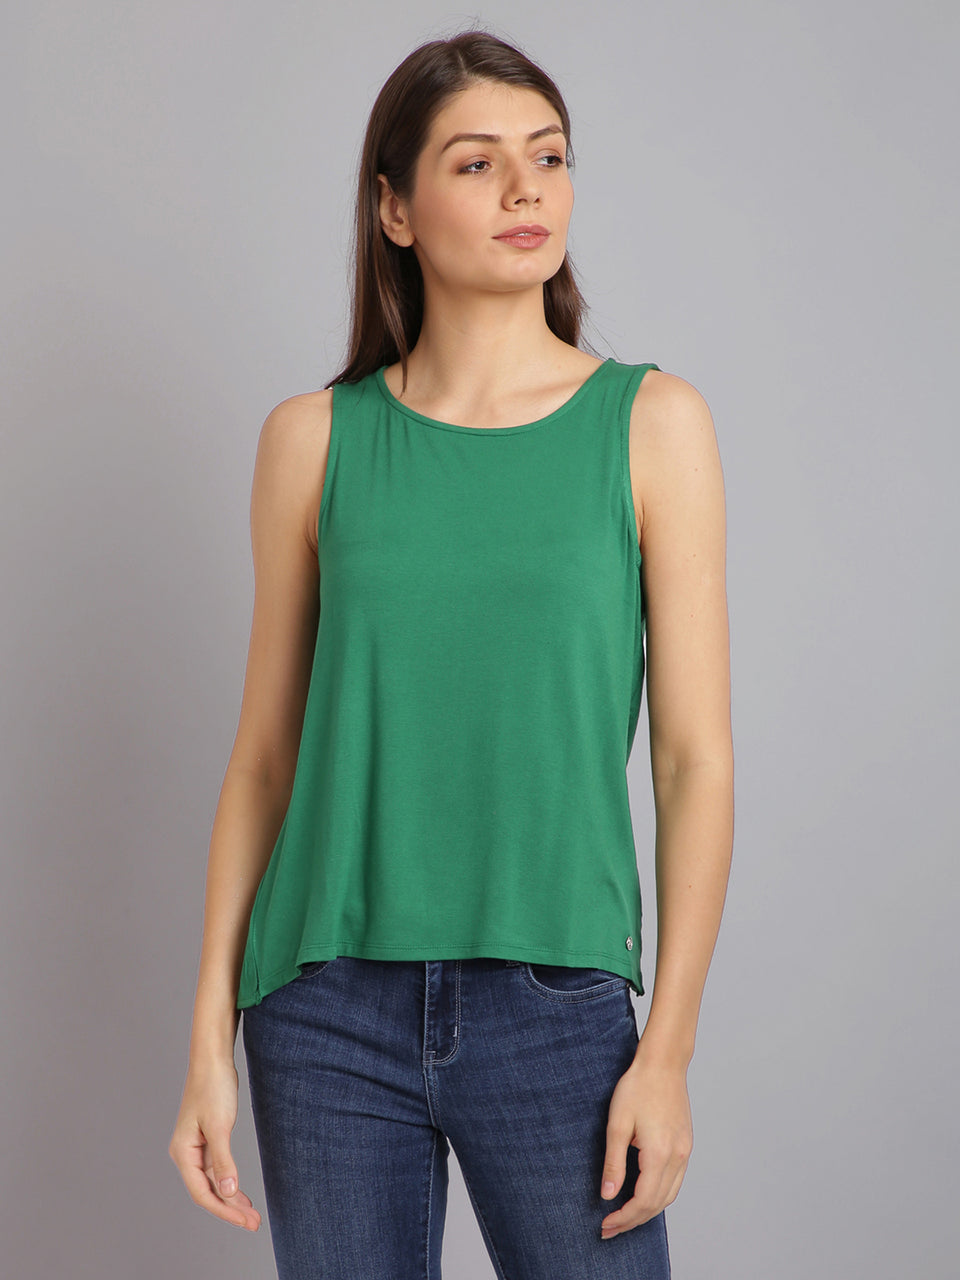 women solid green sleeveless tank tops